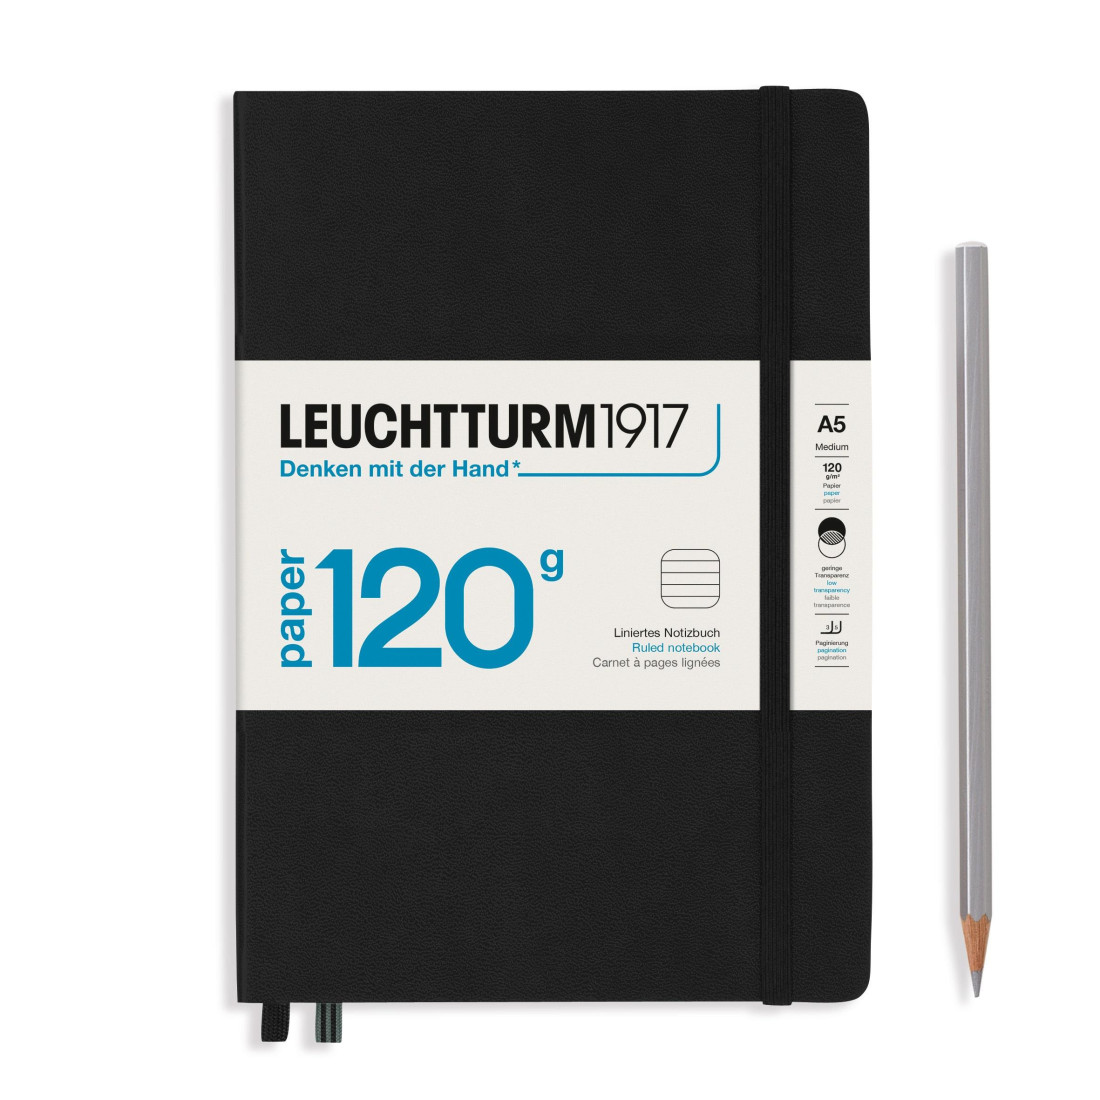 Leuchtturm 1917 Notebook A5 Edition 120g Black Ruled Hard Cover L